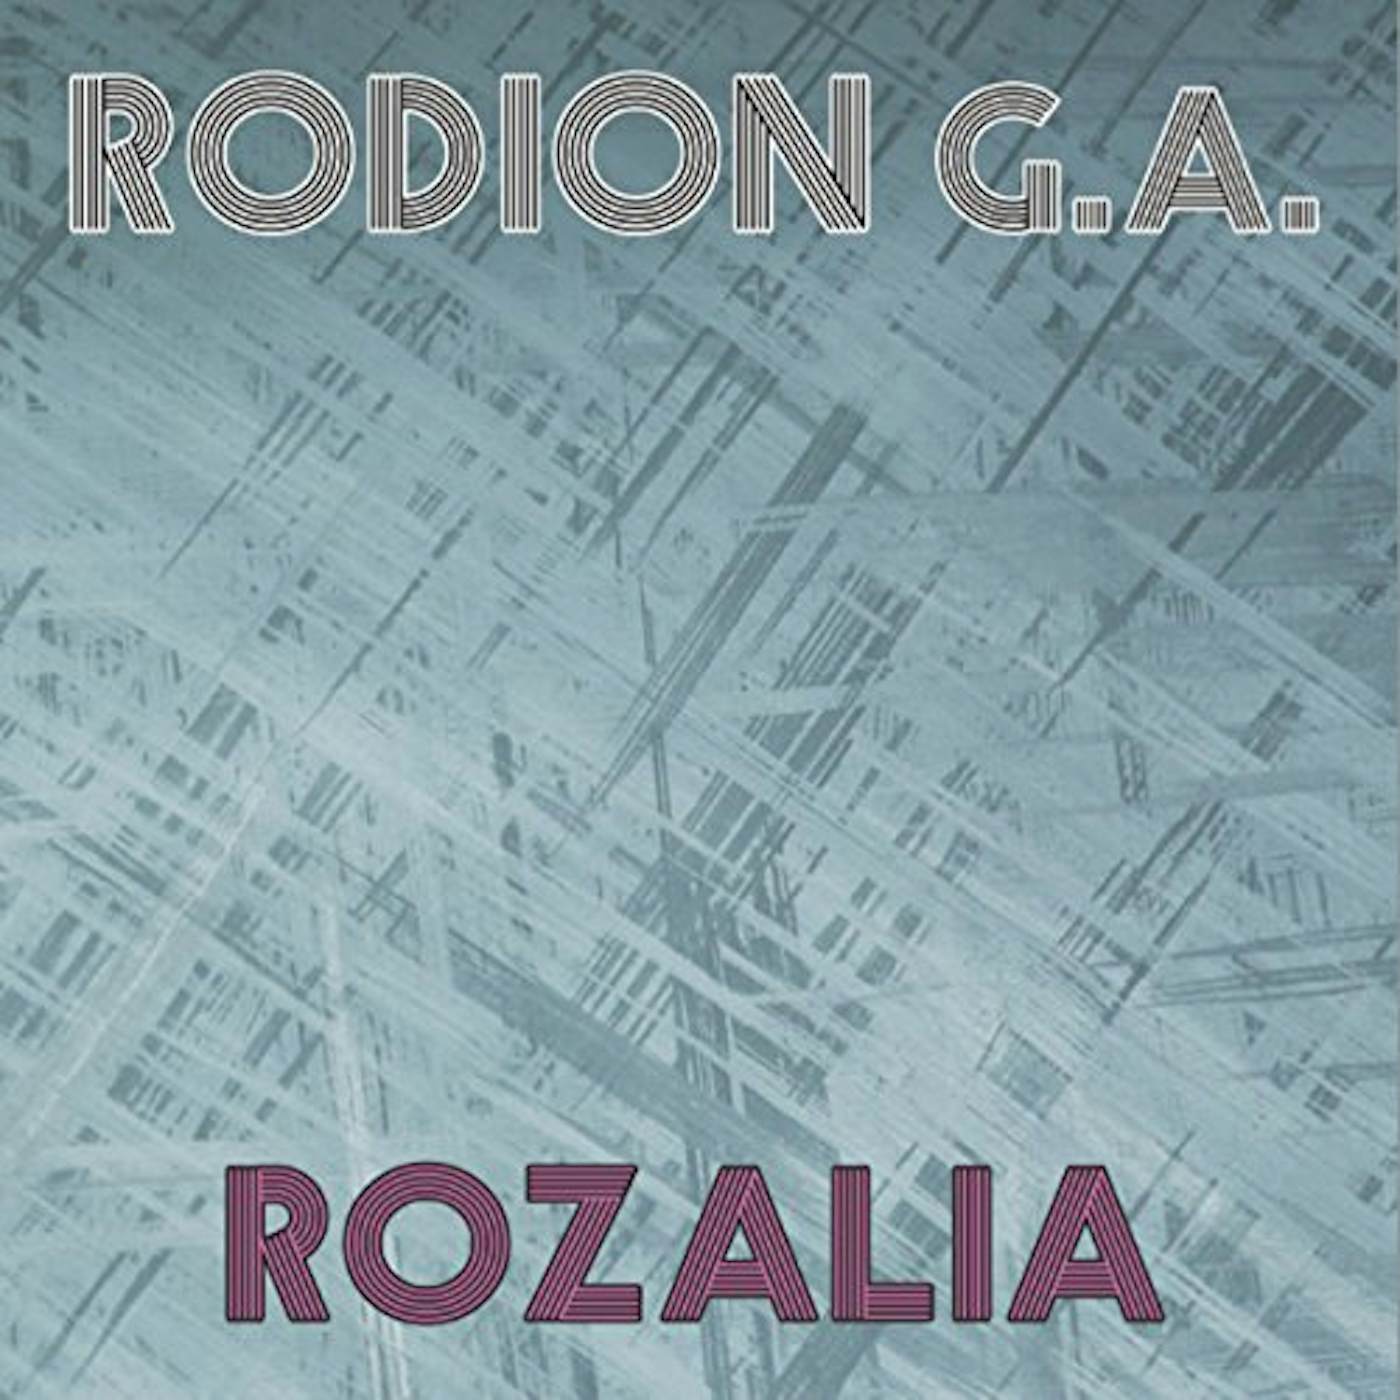 Rodion G.A. Rozalia Vinyl Record